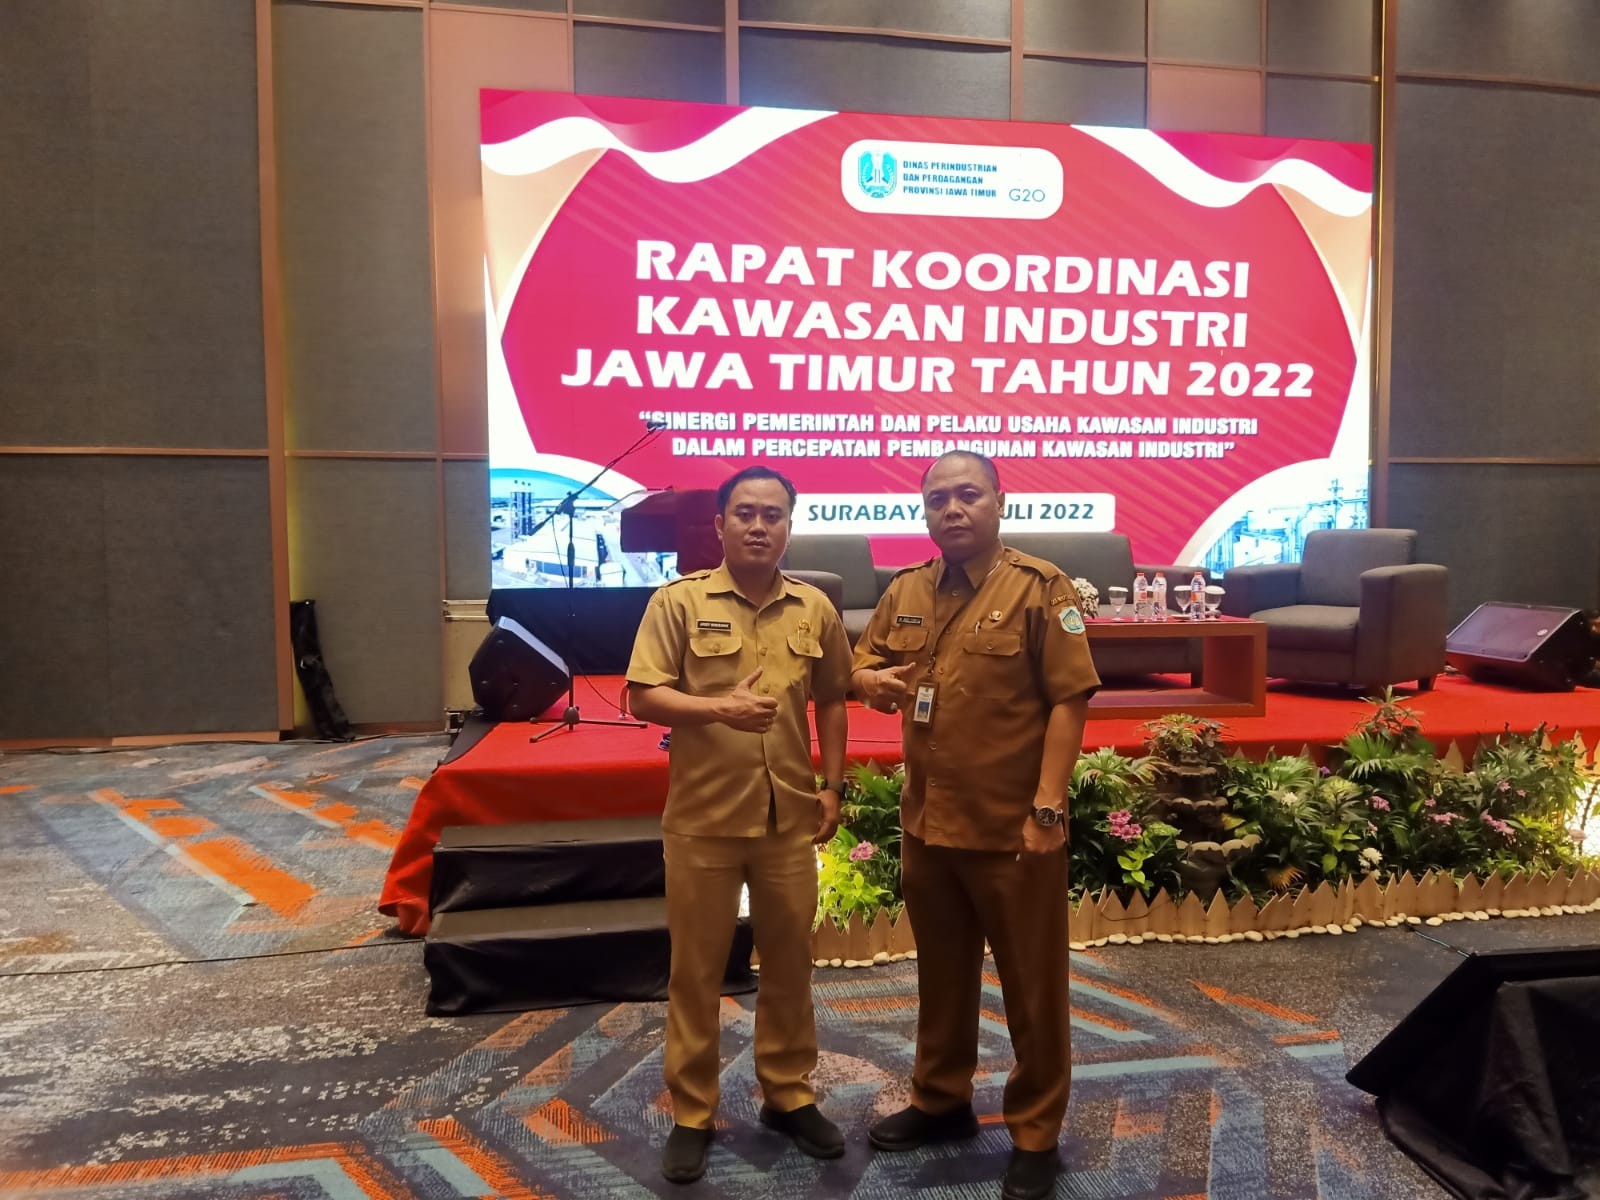 Rapat Koordinasi Kawasan Industri Jawa Timur Tahun 2022